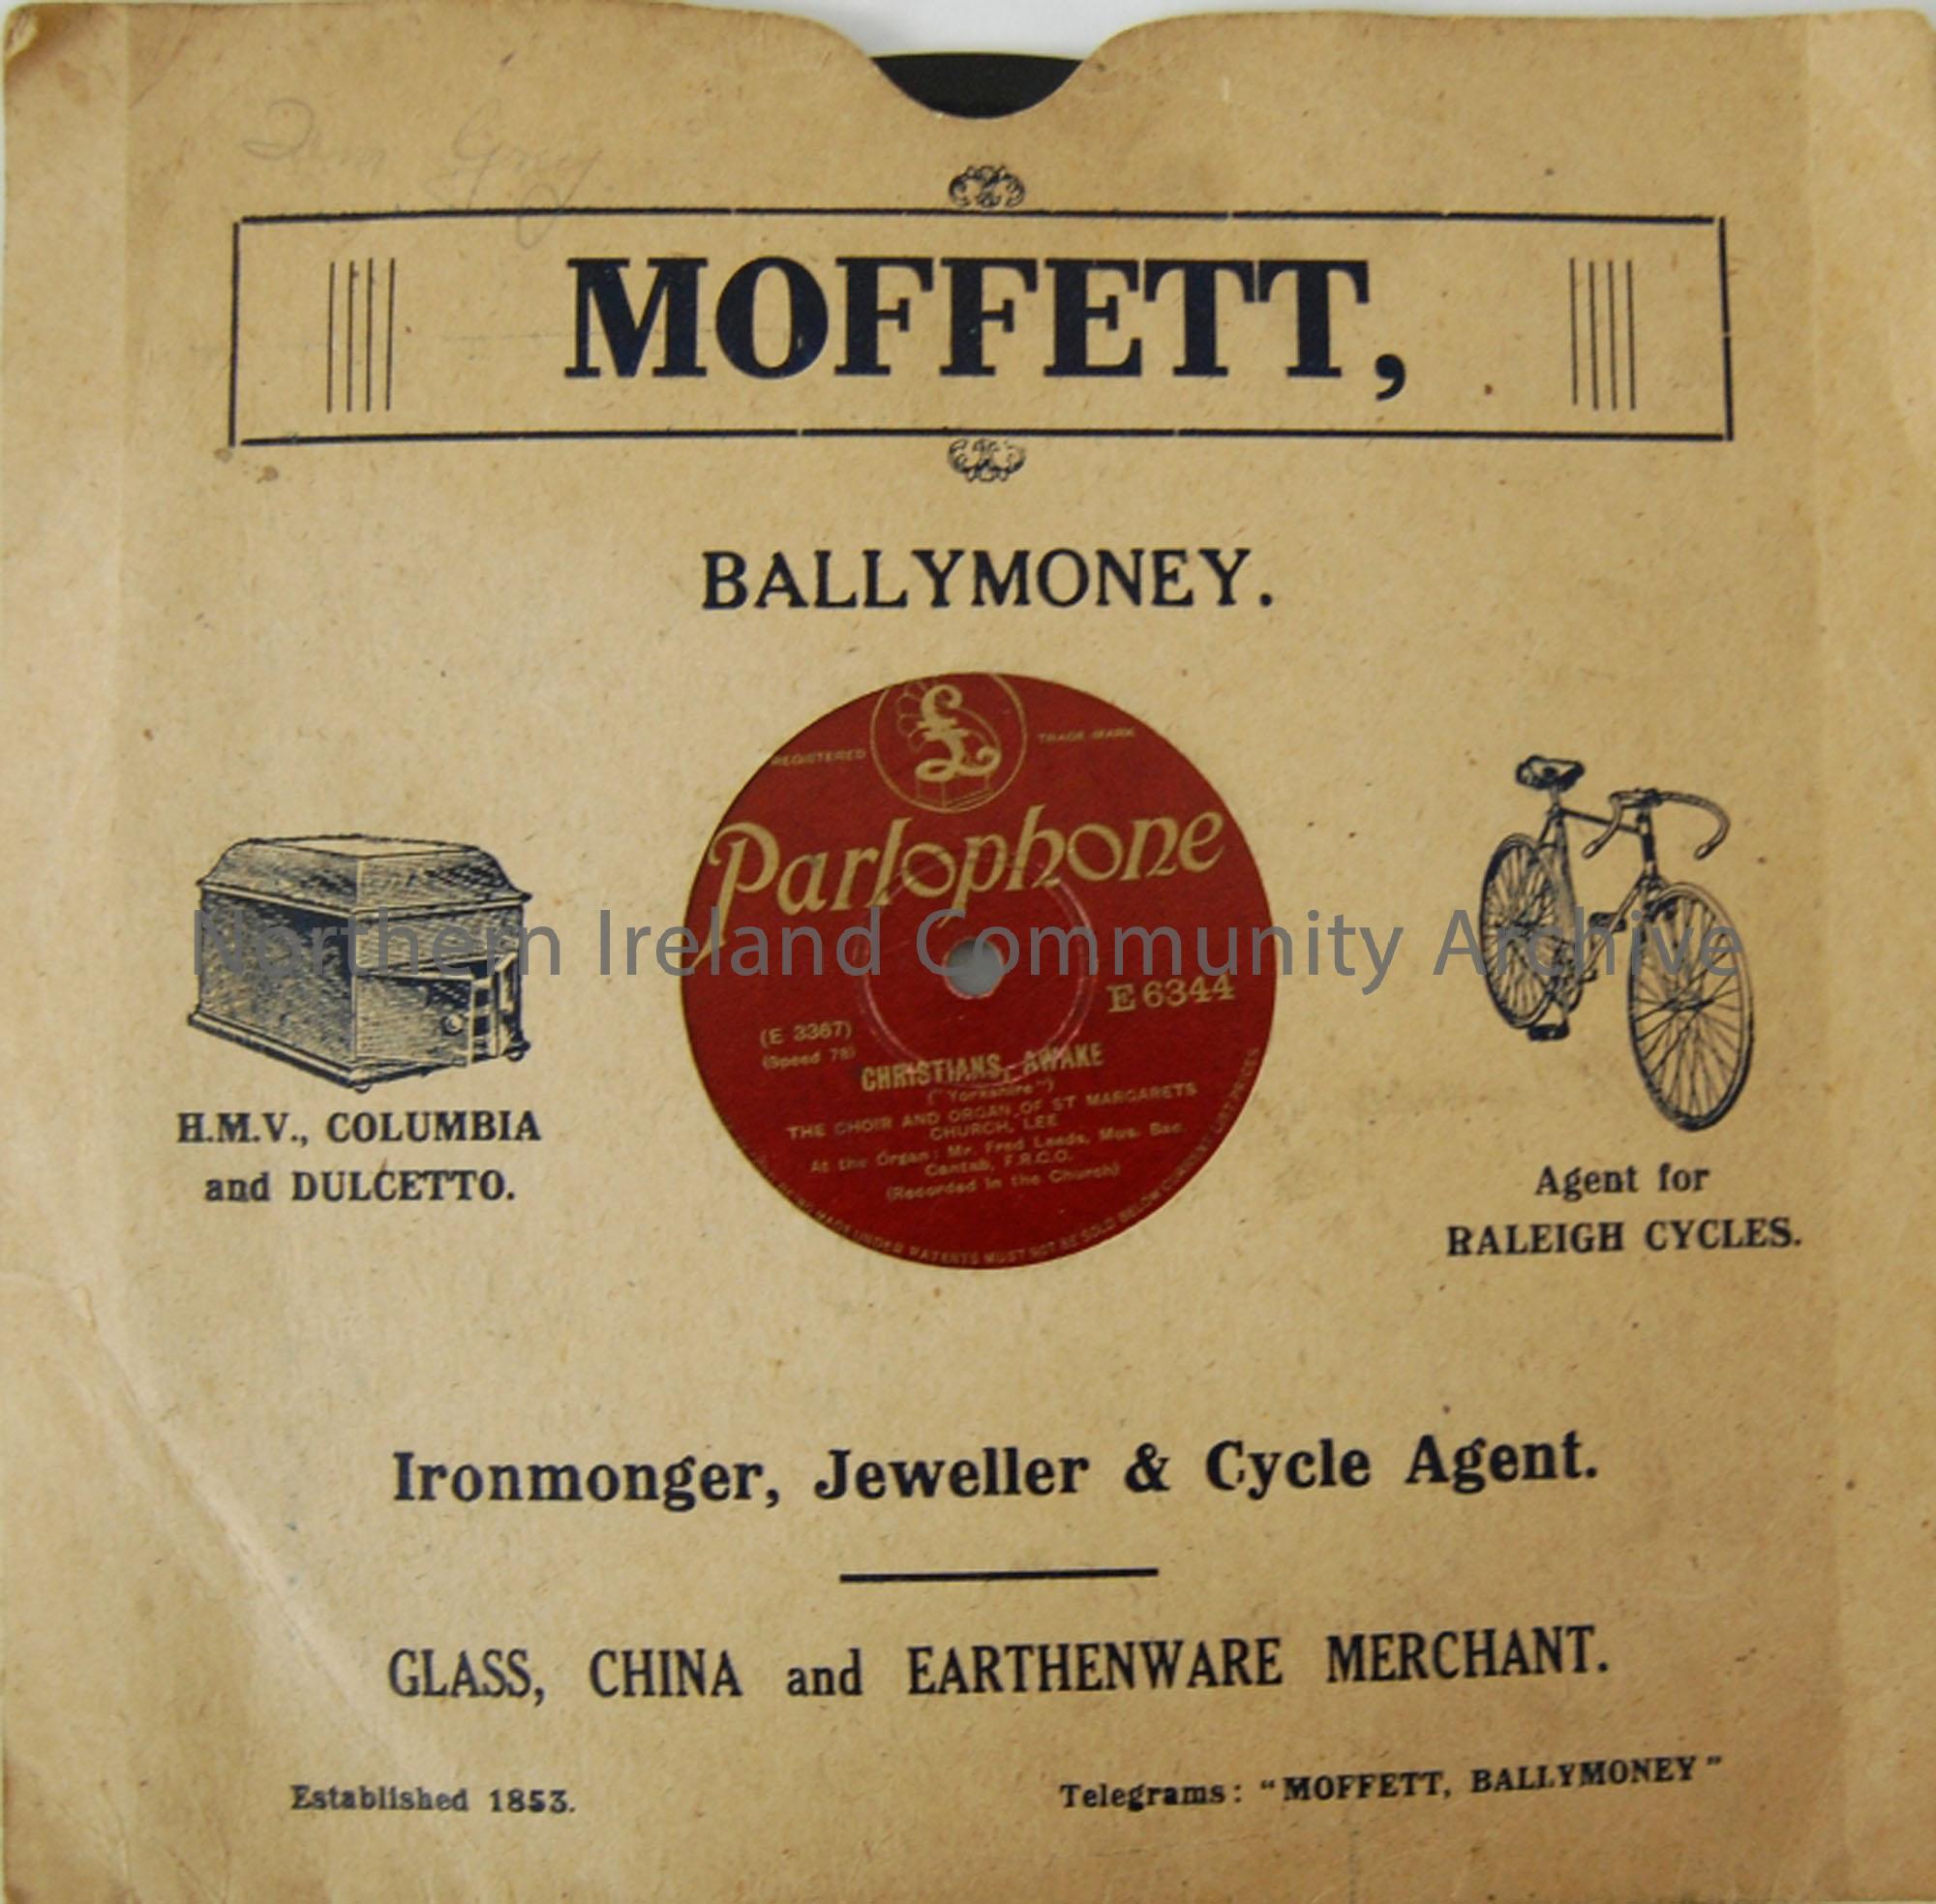 Gramaphone record and sleeve from Moffett’s store, Ballymoney